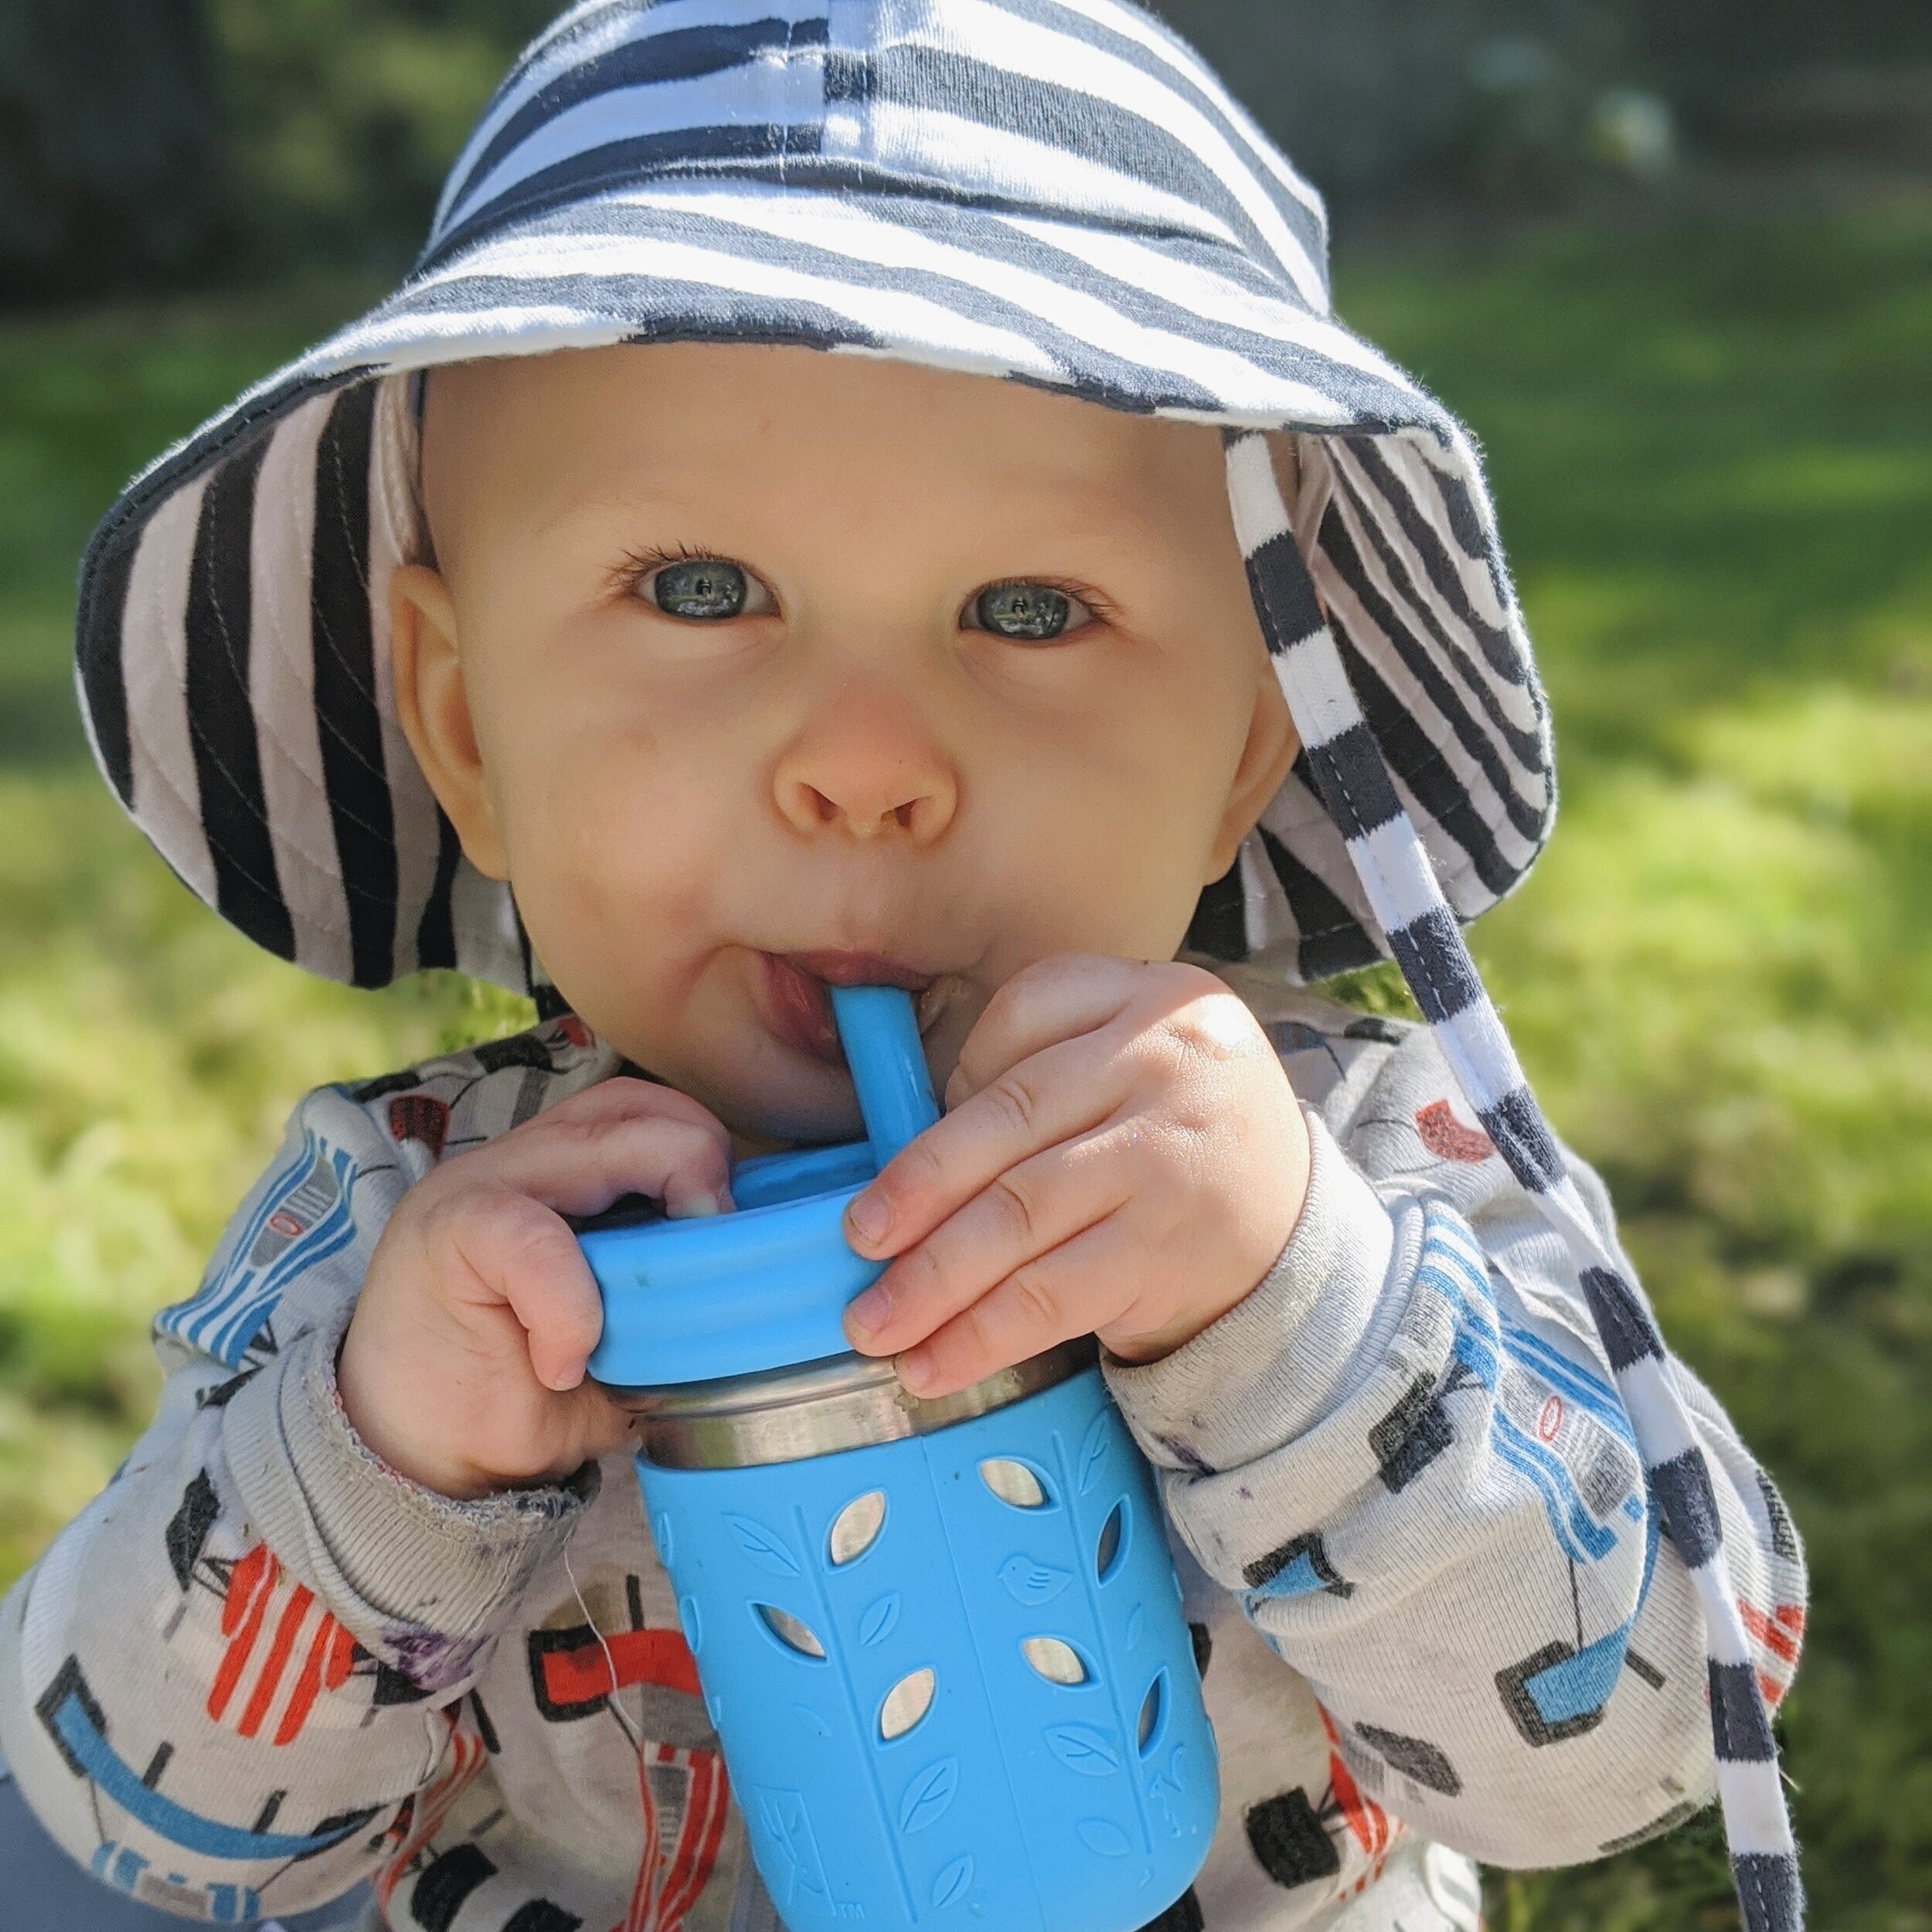 Montessori Weaning Cup -- Montessori Baby Week 34